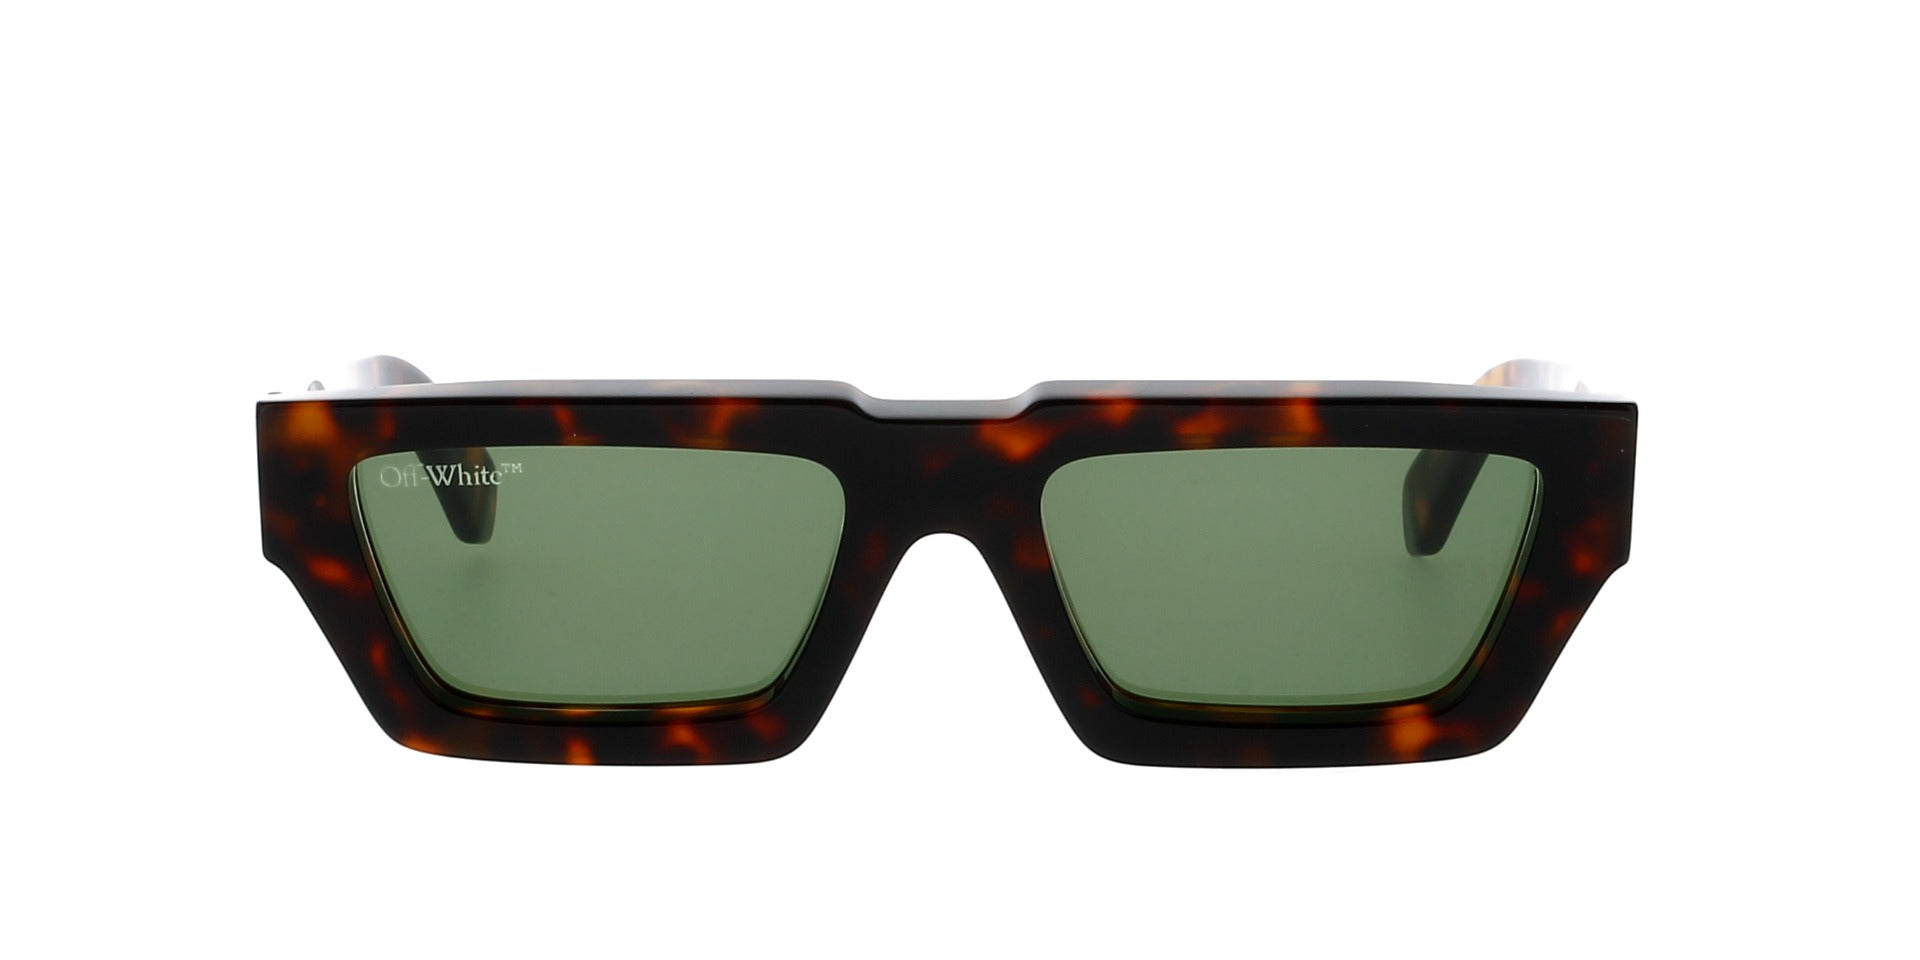 Off-white Manchester Squared Acetate Sunglasses